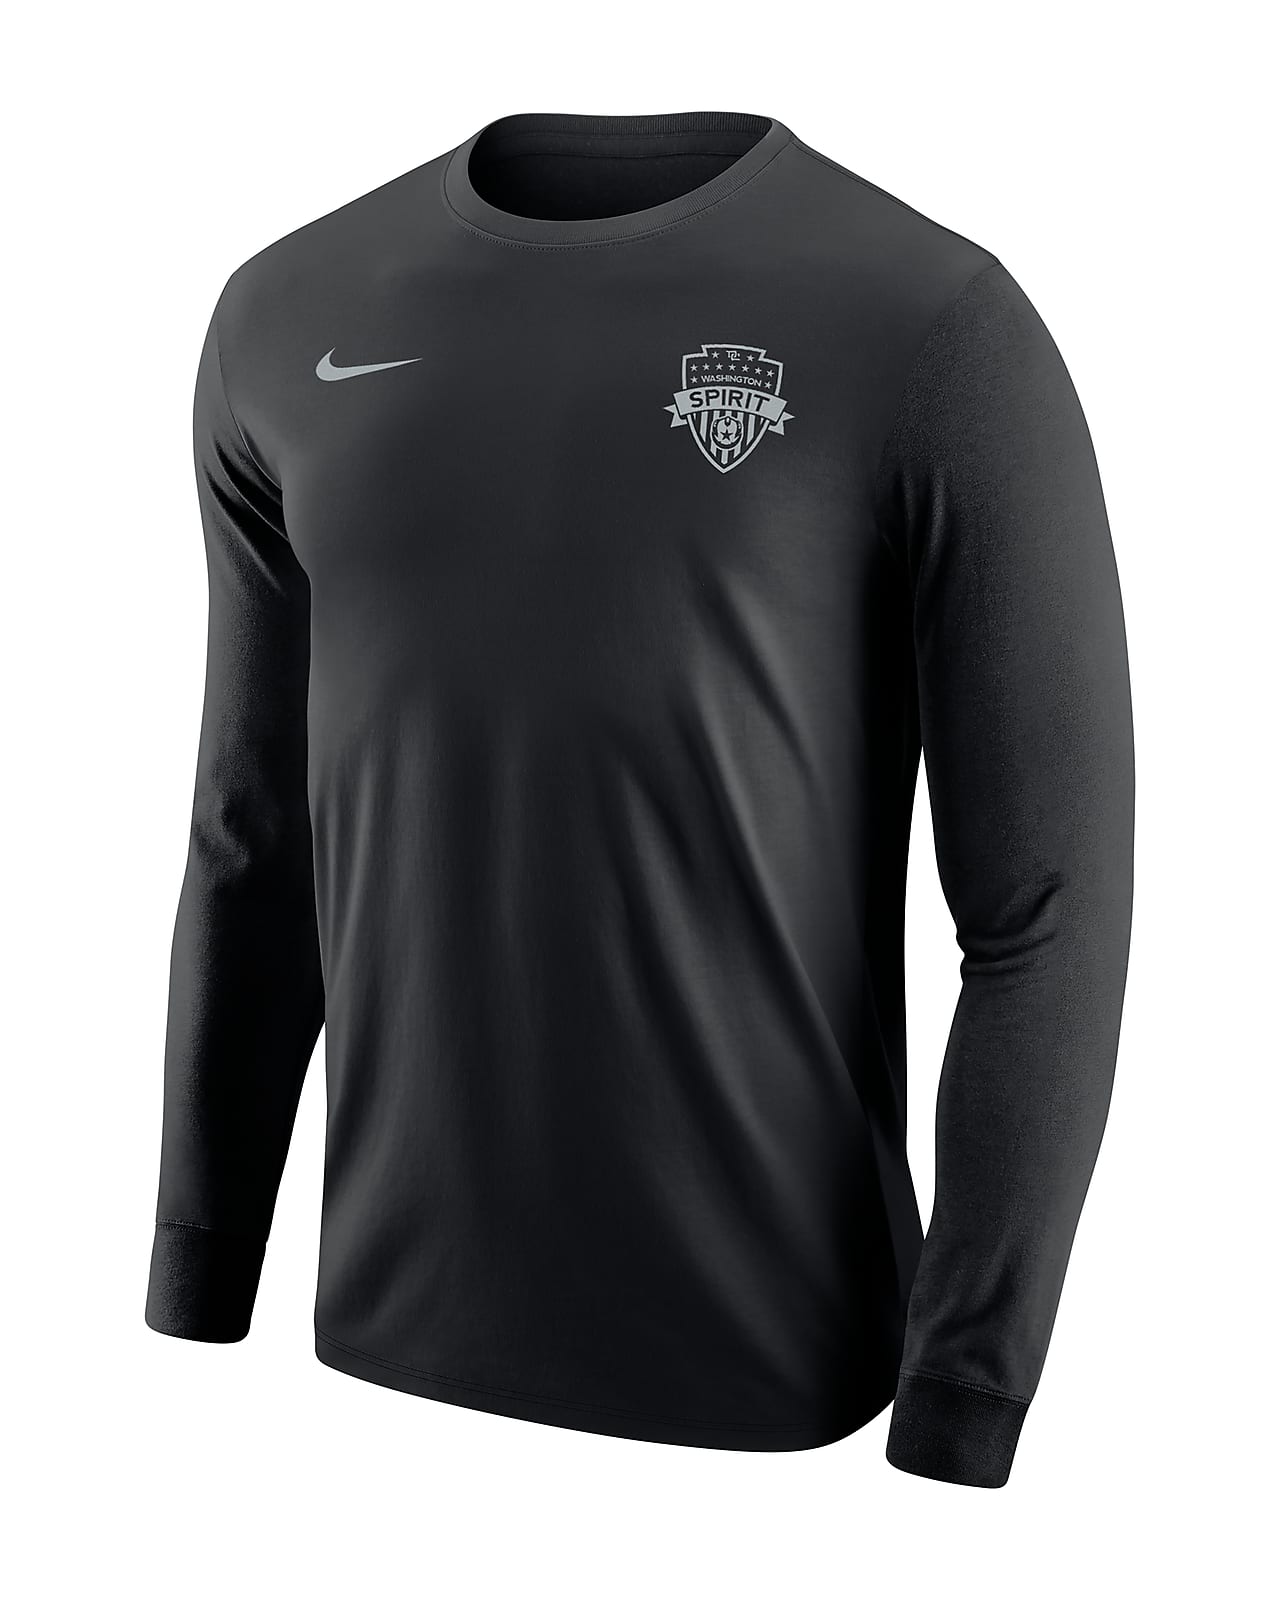 Washington Spirit Men's Nike Soccer Long-Sleeve T-Shirt